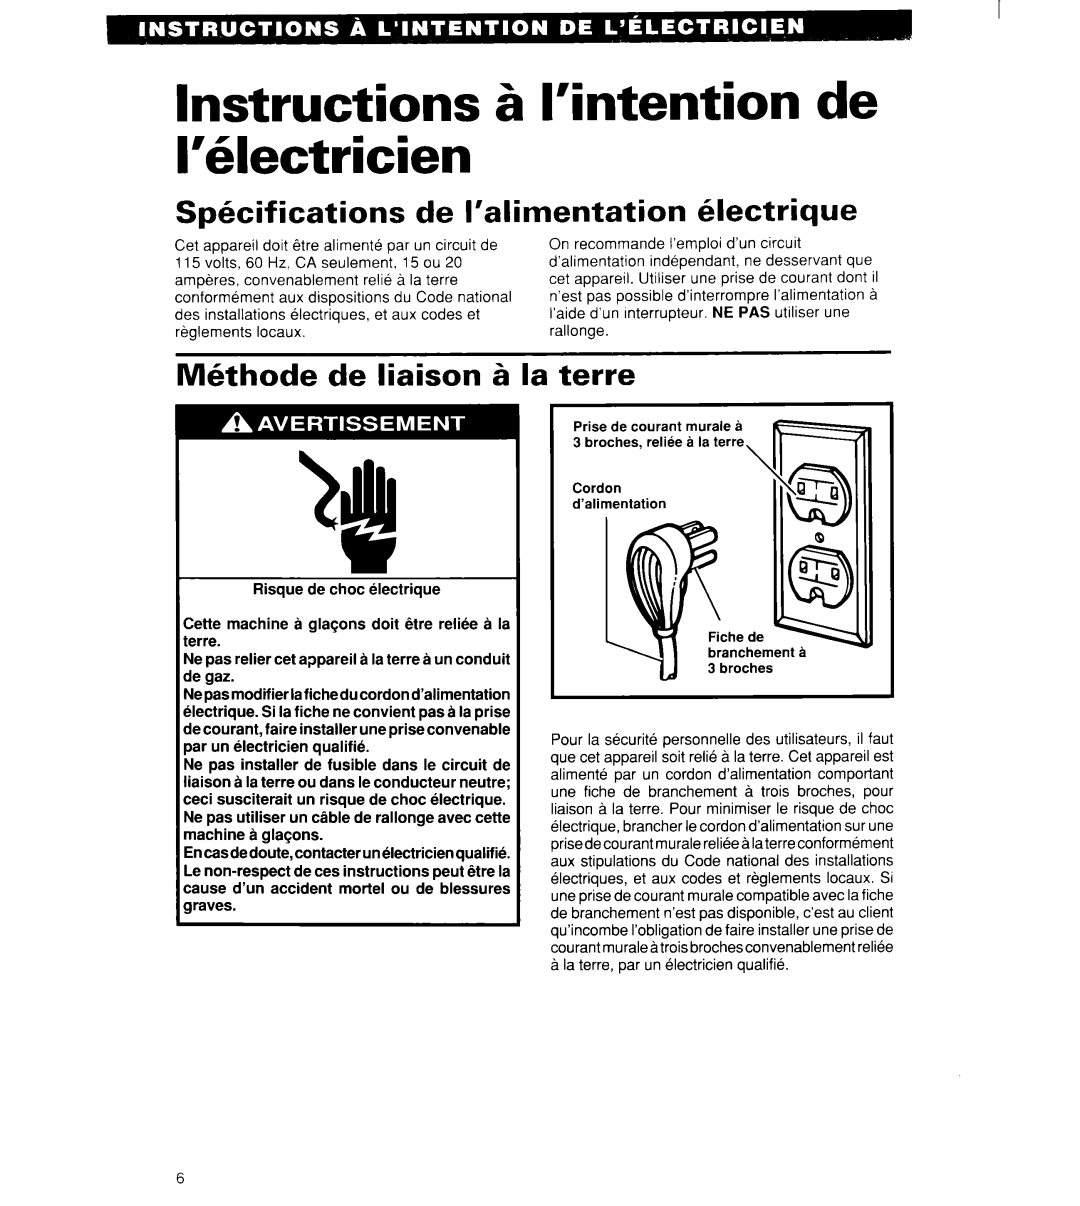 Whirlpool 2180913 manual Instructions & I’intention de Wlectricien, Spkifications de I’alimentation klectrique 